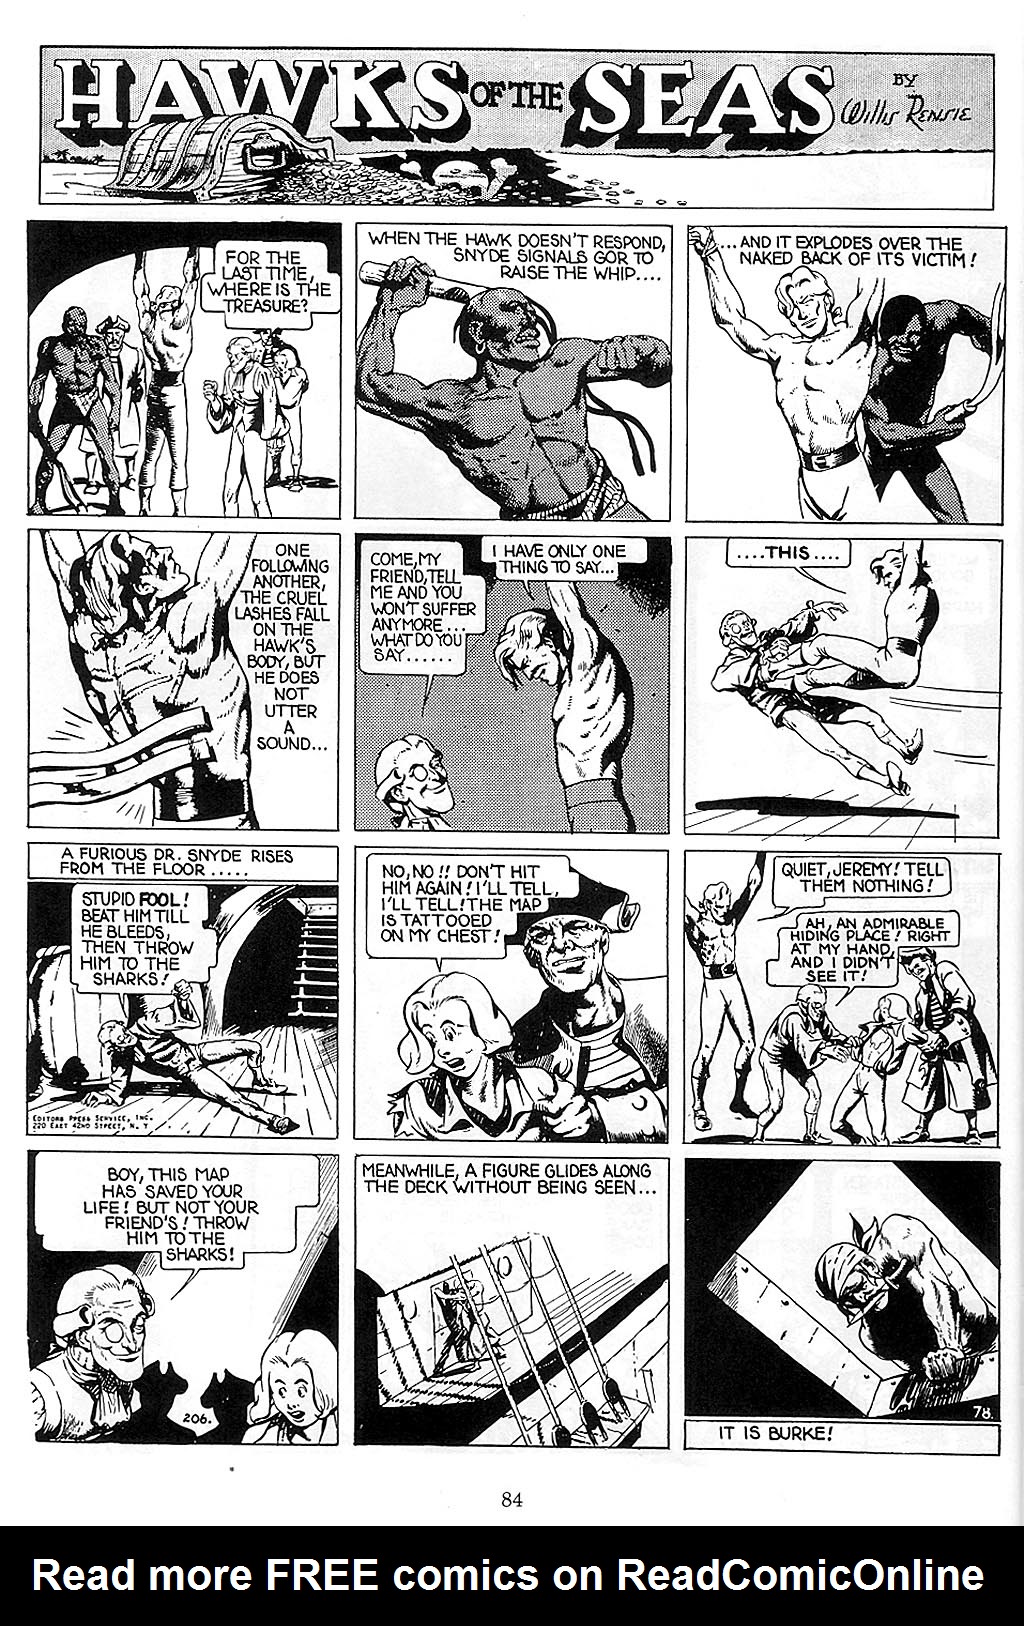 Read online Will Eisner's Hawks of the Seas comic -  Issue # TPB - 85